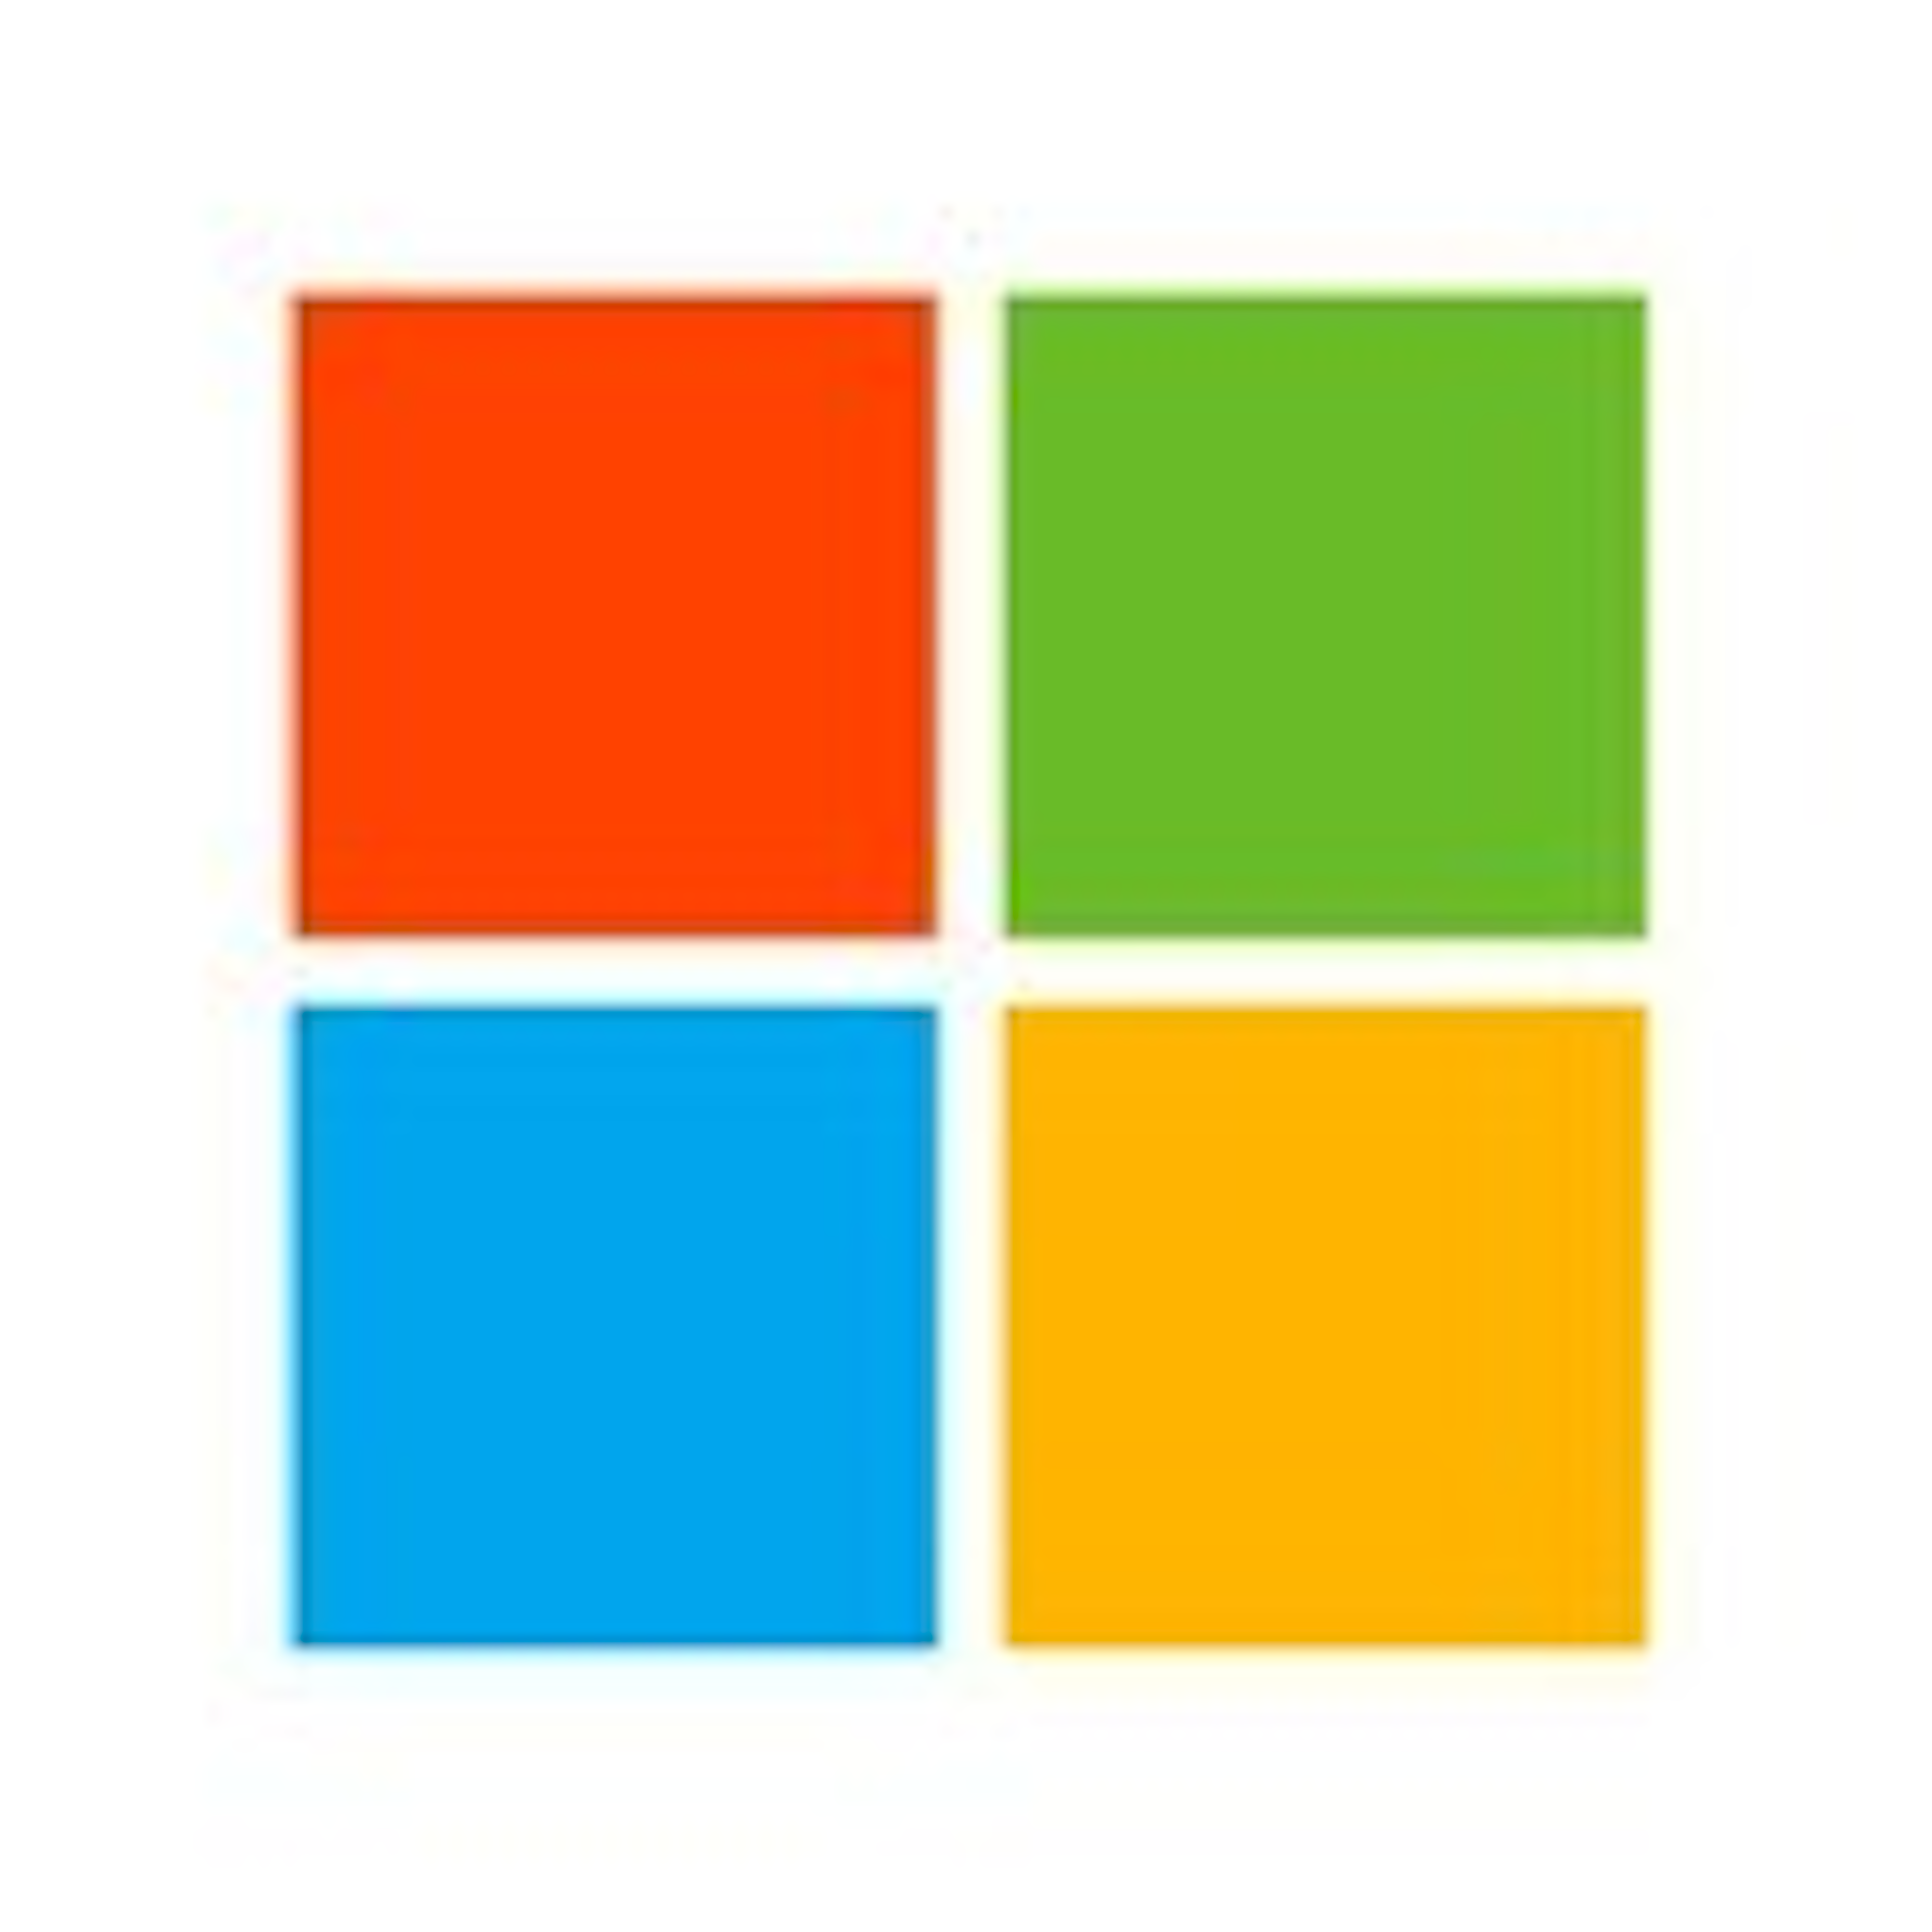 Microsoft Authenticator Logo